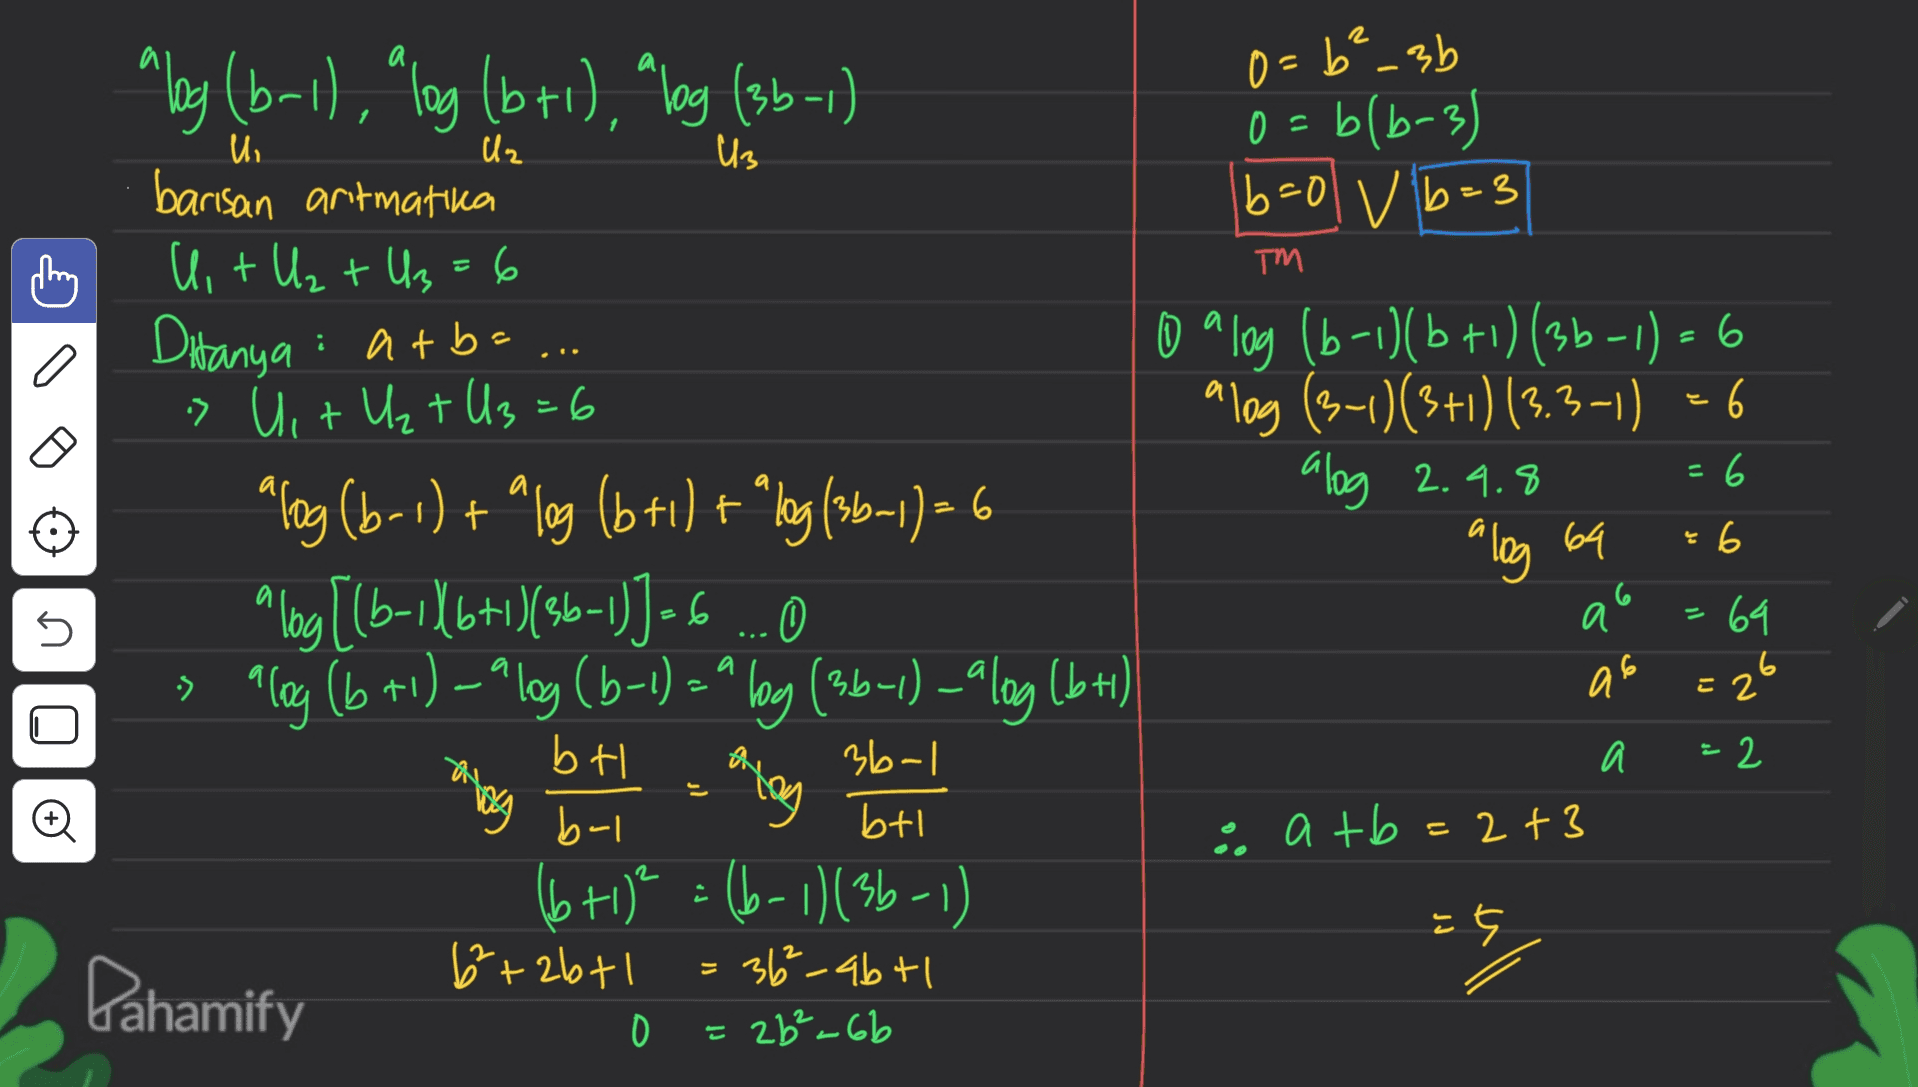 O=b²_3b 0b = 6(6-3) bb 1 Uz TM E atba 3 = e 6 aby (b-1), “log (bc), log (36-1) и, barisan artmatica b=0 v b=3 Uit U₂+U₂=6 Ditanya : O alog (6-1)(b +1) (36-1) = 6 > Uit U₂+U₂=6 alog (3-1)(3+1) (3.3-1) - 6 alog 2.4.8 abong (b-1) + "lng (6+1) + "leg (1-1)-6 alog 69 alog [(b-146+1)(26-1)]-6...O 0 64 = alog (6 +1) – aloy (6-1) > ) - - ^ log (36-1)-"log (br) ao = 26 bt malay atay ; atb=2+3 2 + 3 (6+1)² = (b-1)(36-1) 노5 6²+26+1 36%-abtl Dahamify e 6 b- | طه 5 = a a 6 И* - E 2 | - ماه a · 2 Ø vog brl btl 0 = 2b²-66 